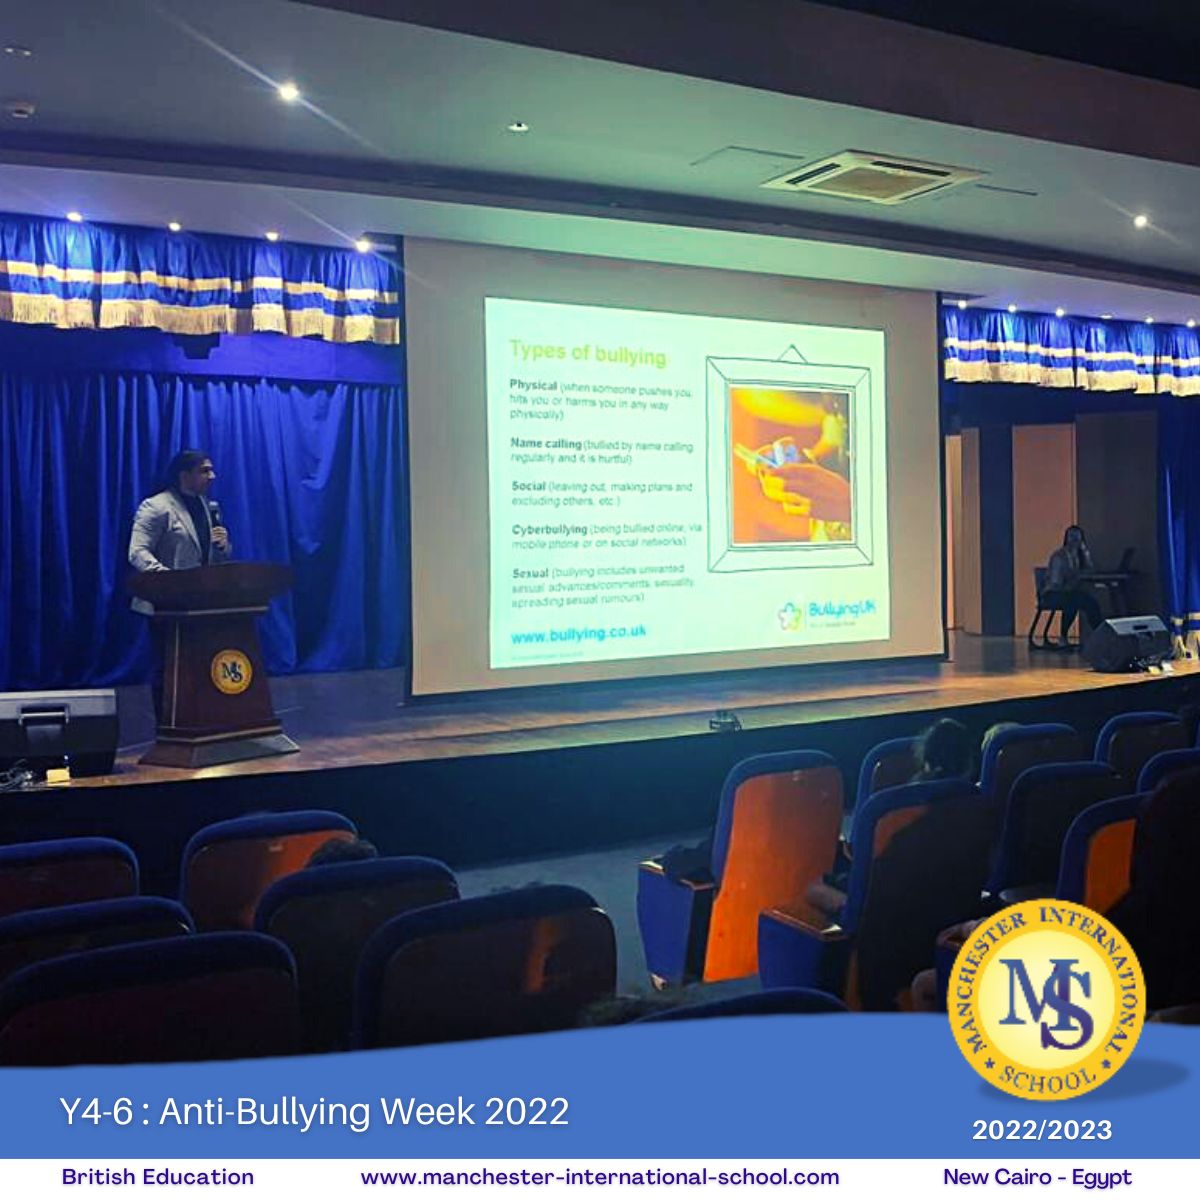 Y4-6 : Anti-Bullying Week